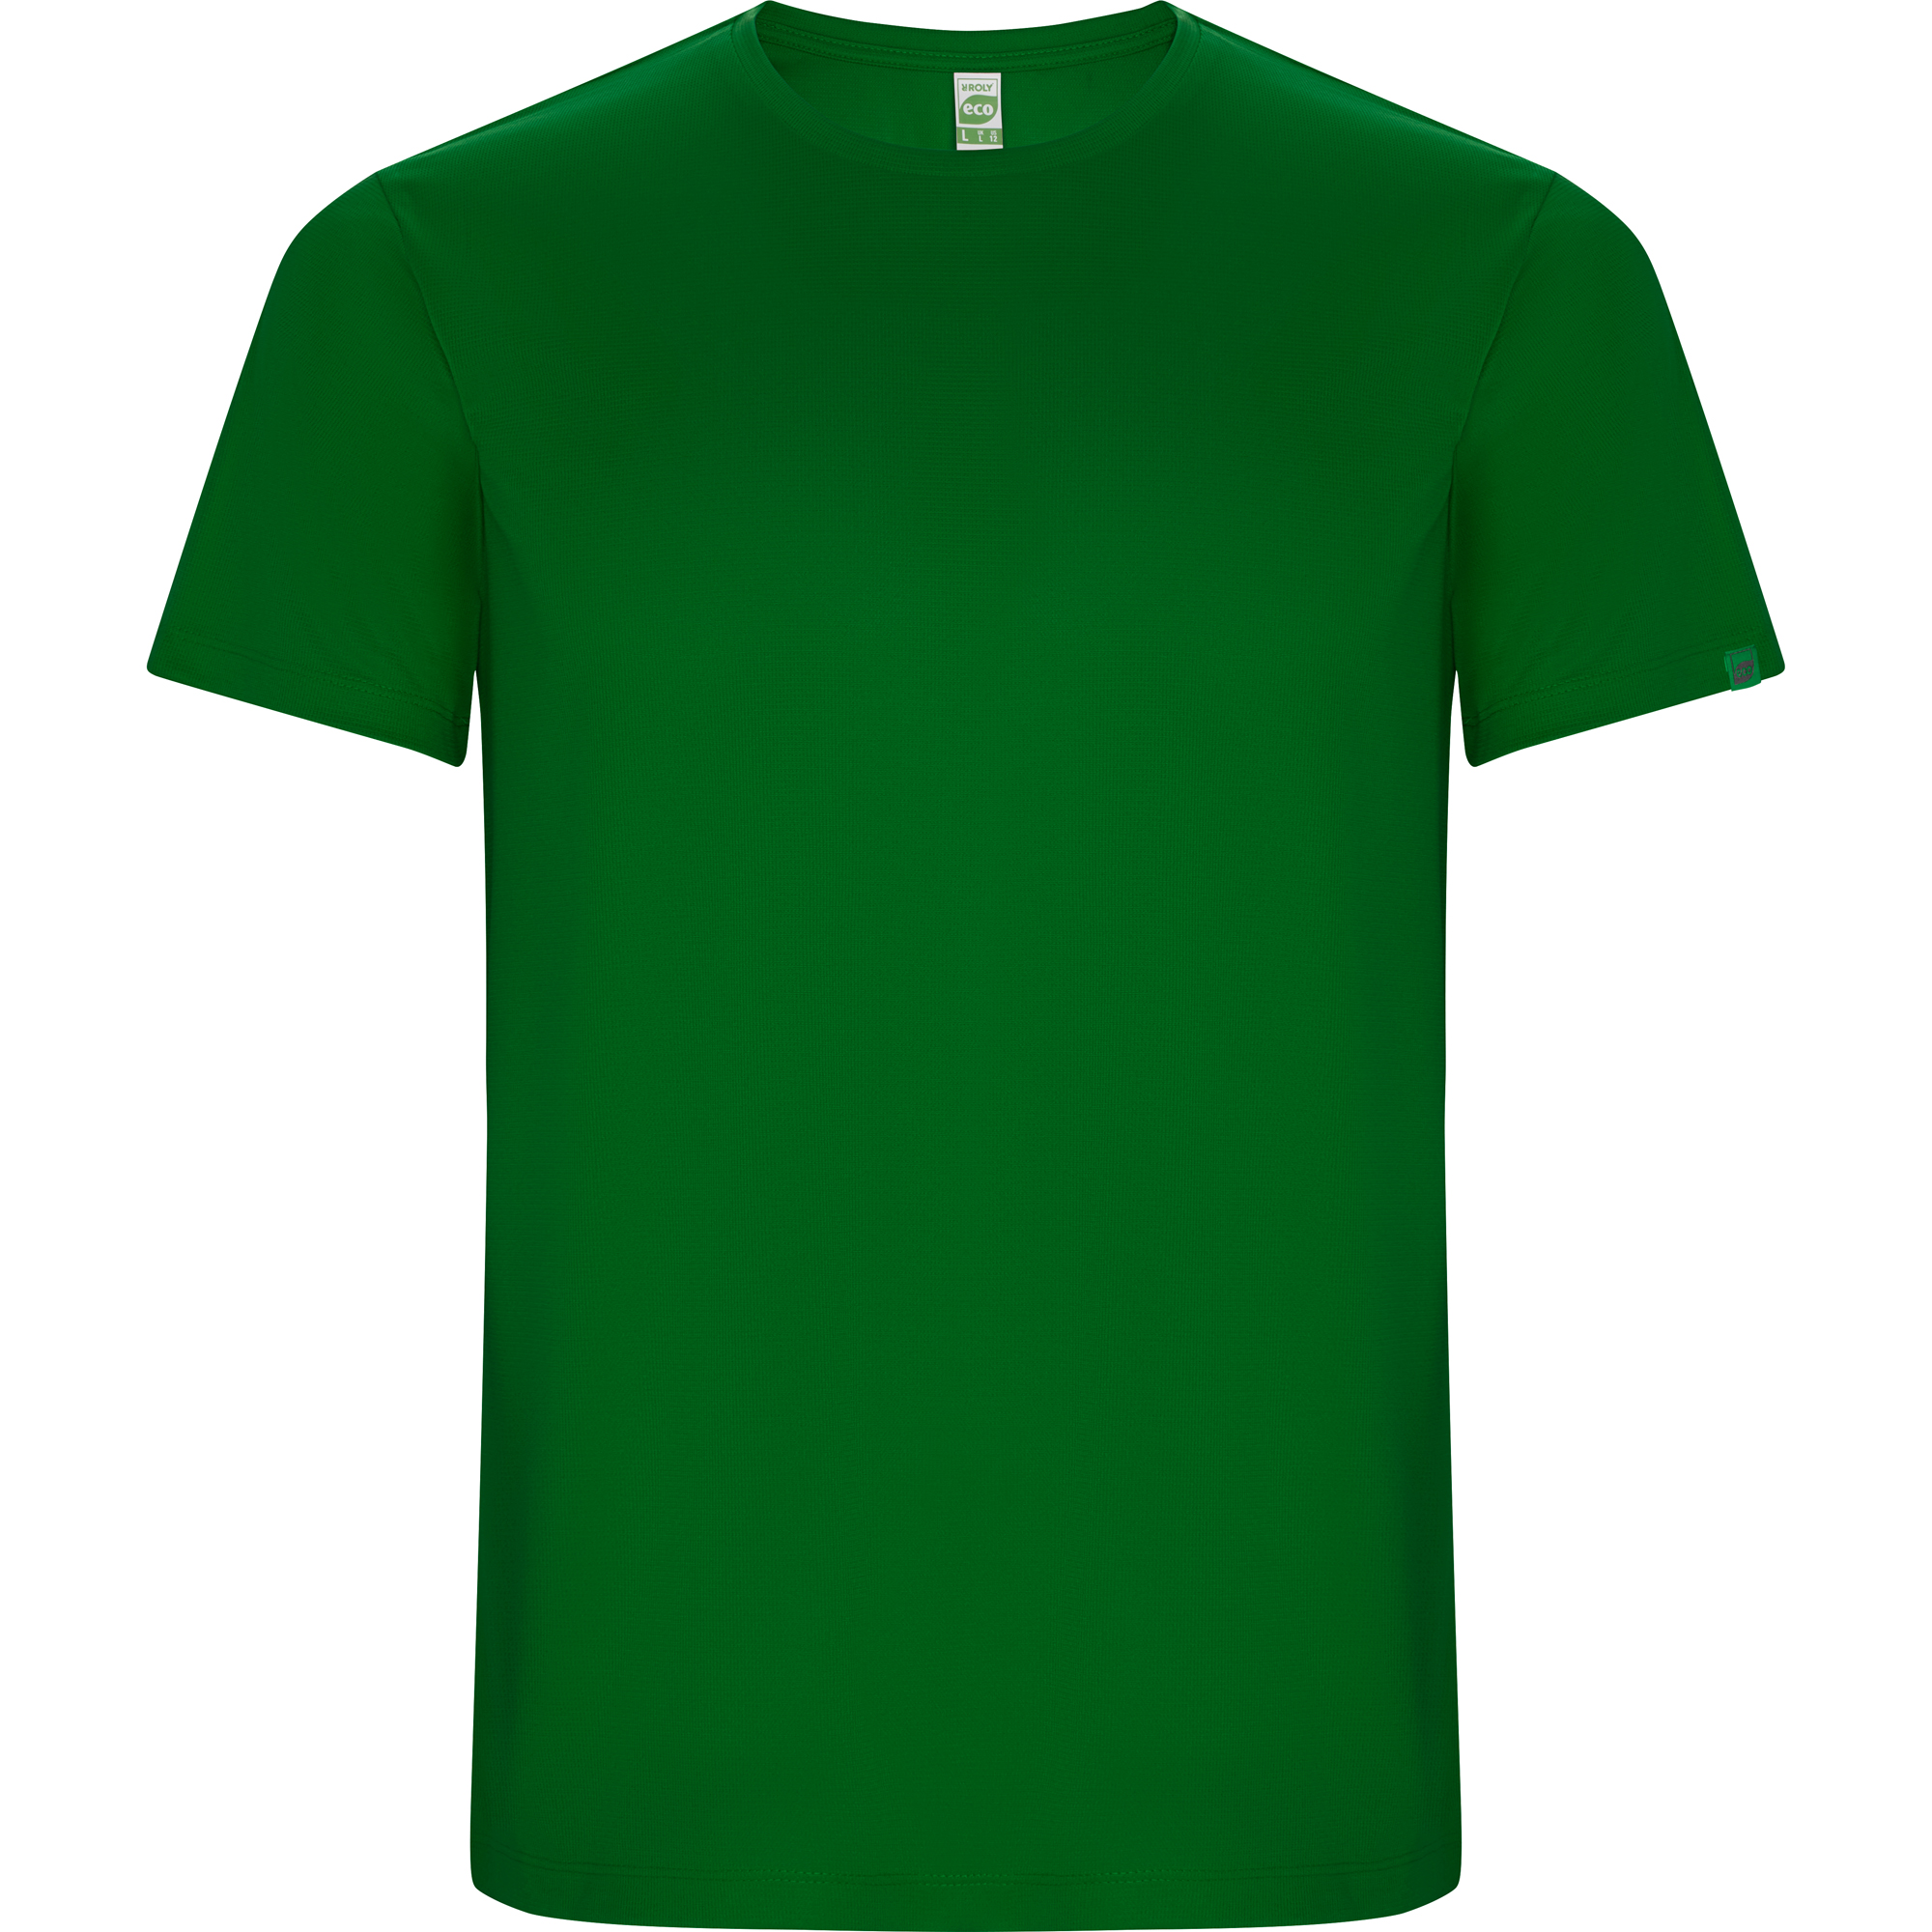 r0427-roly-imola-t-shirt-tecnica-verde-felce.jpg